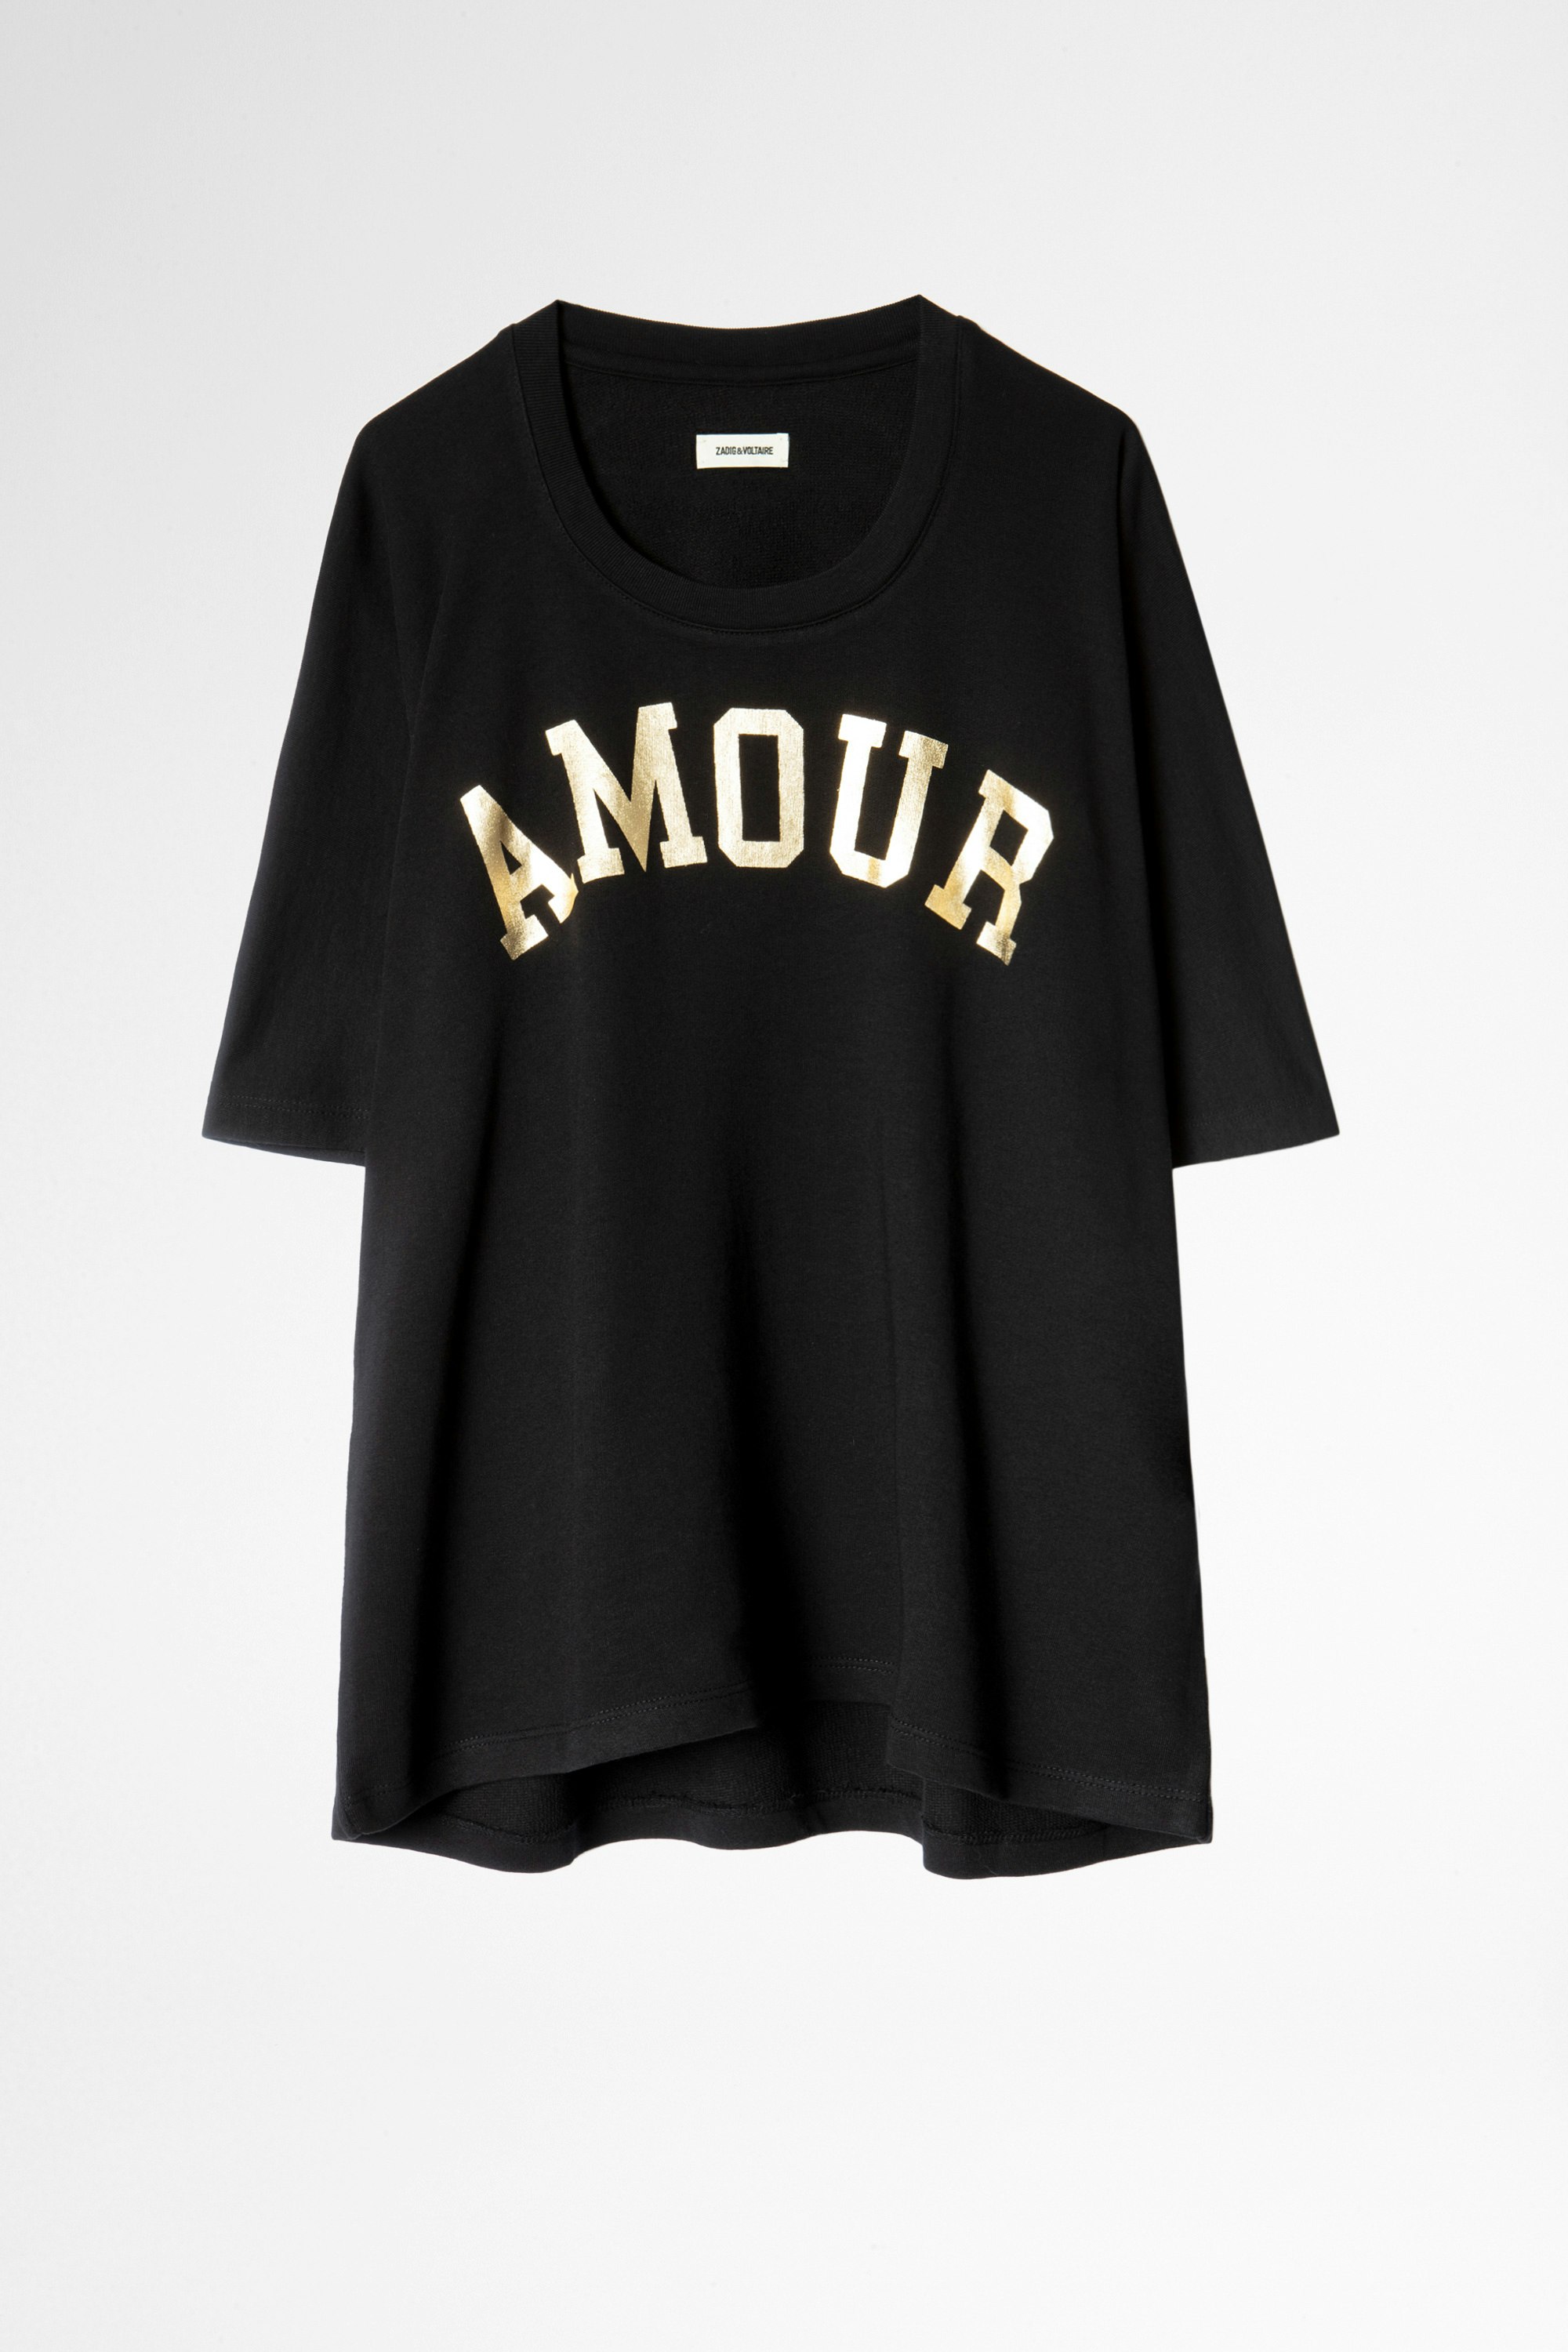 Sweatshirt Portland Amour Kurzärmliges schwarzes Damen-Sweatshirt mit Schriftzug.